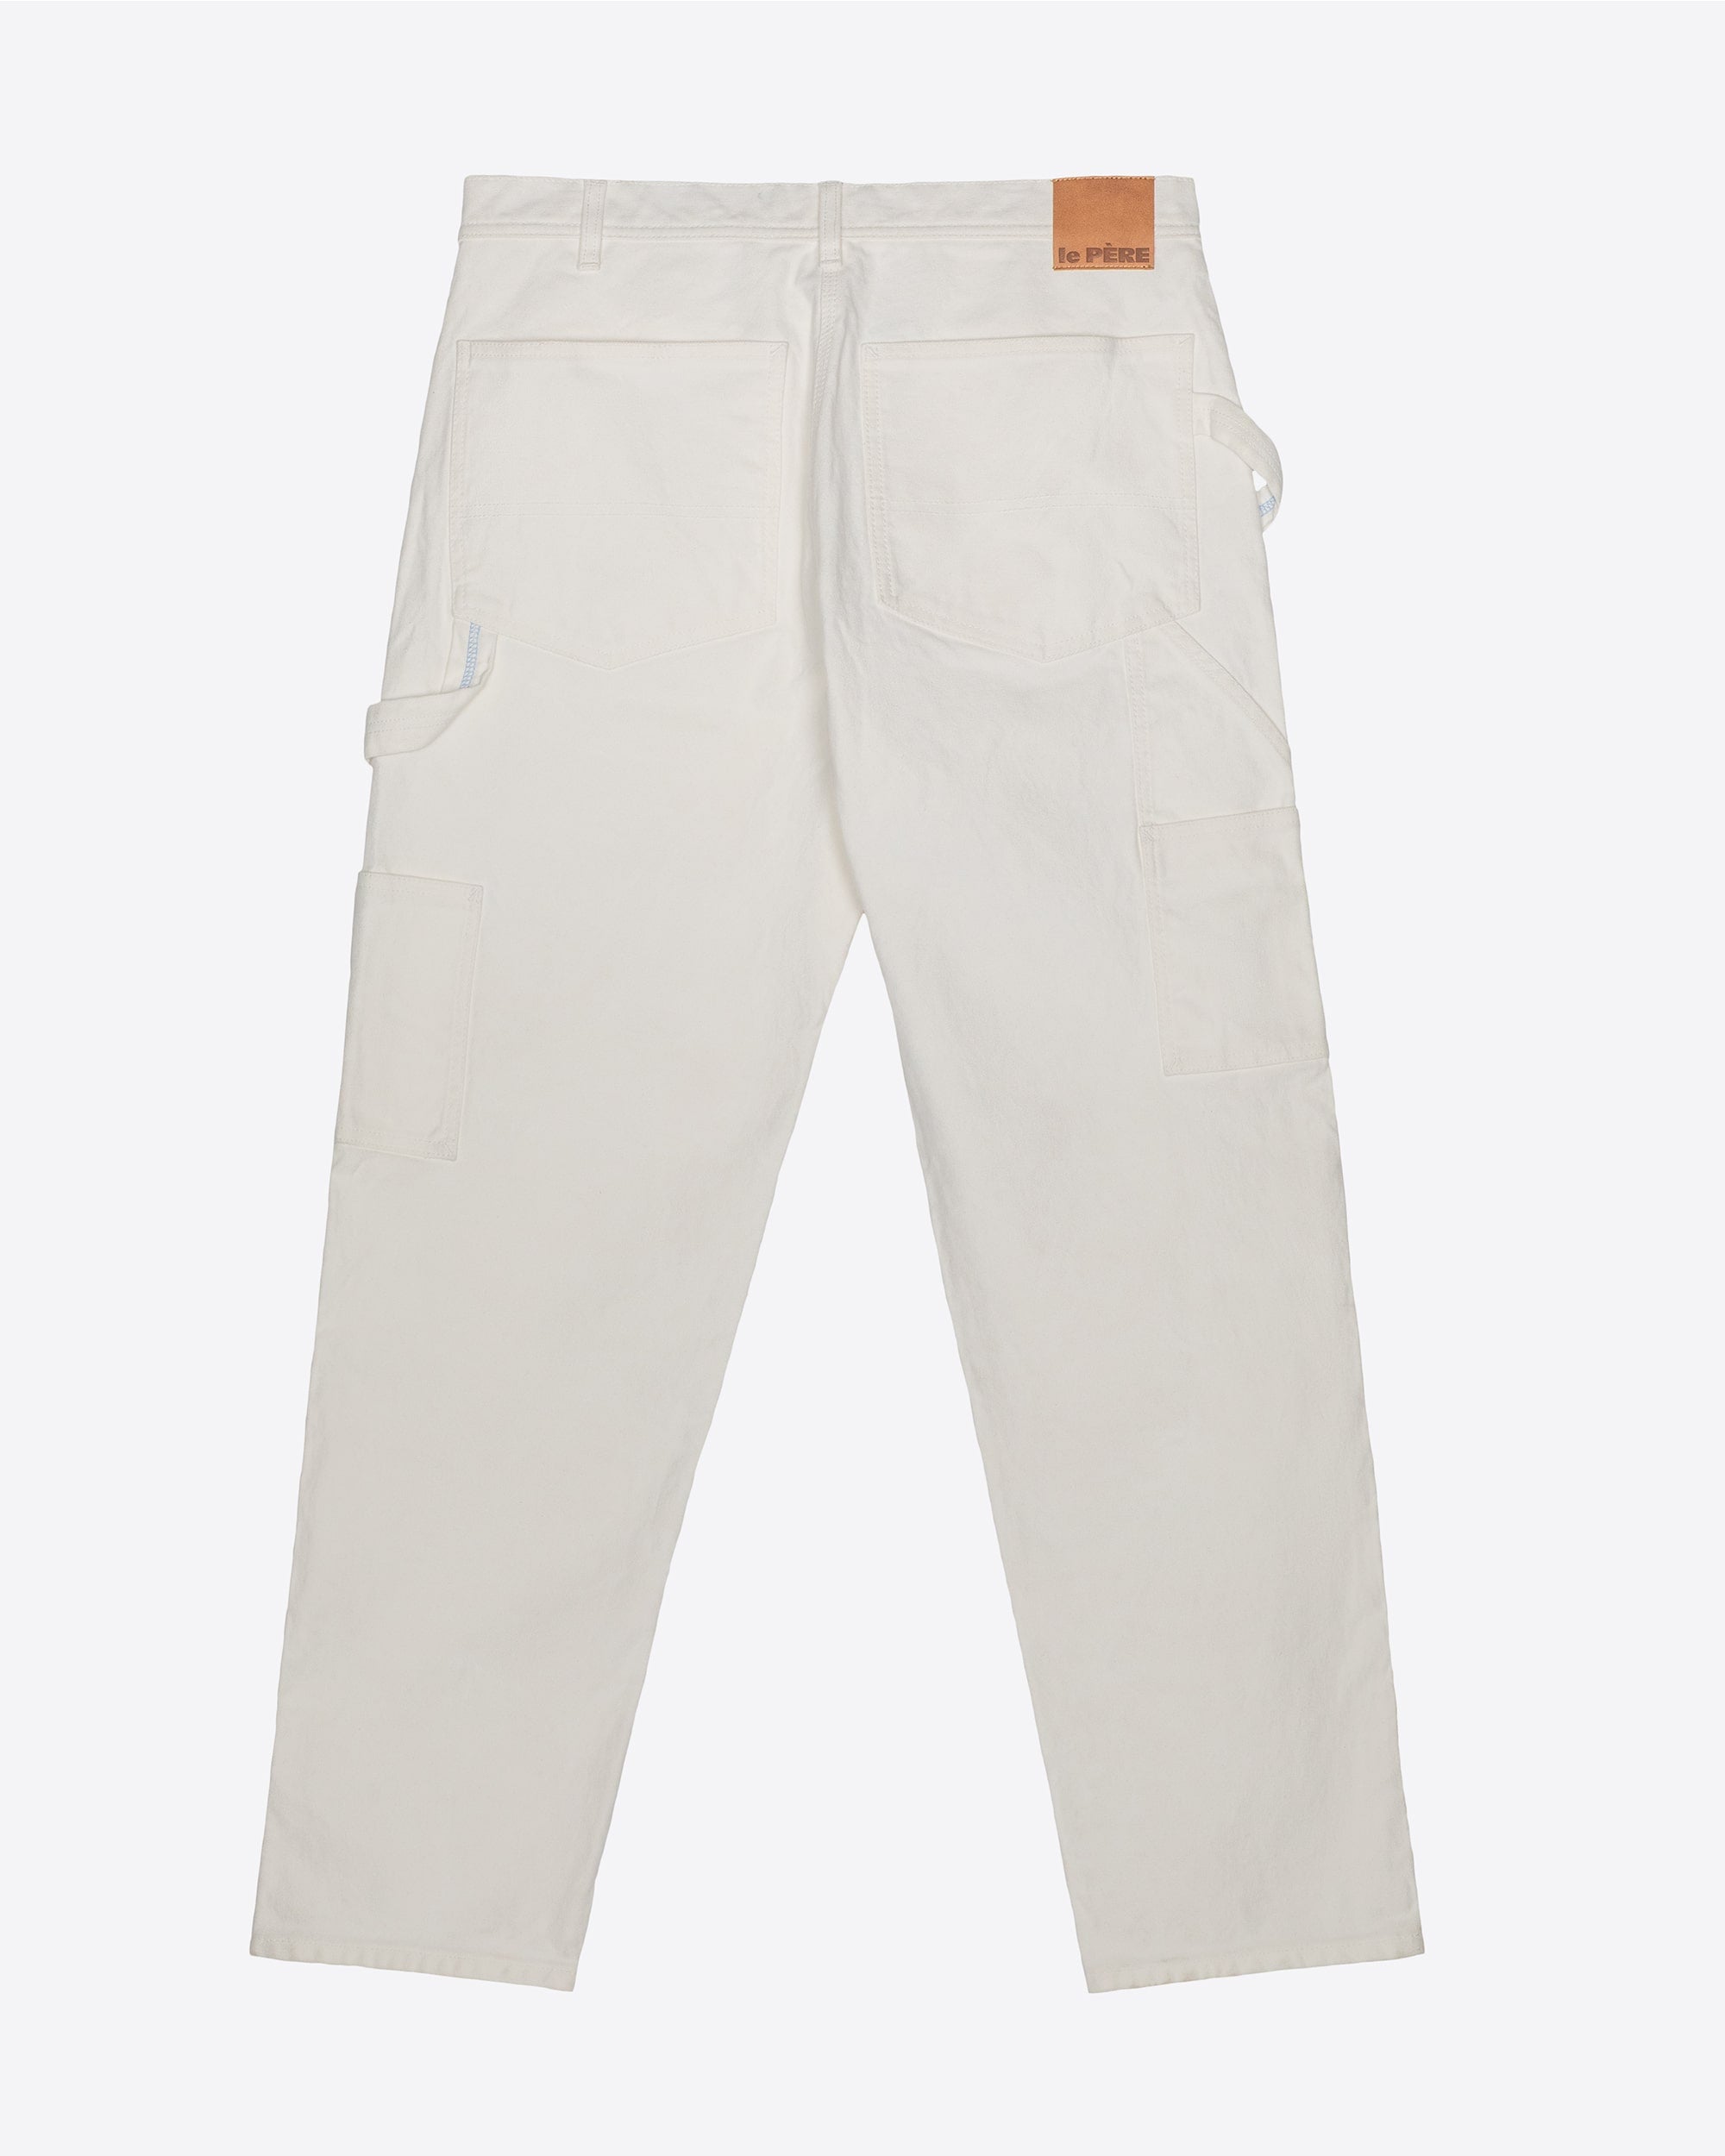 Genuine White Painters Trousers Multi-Pocket 100% Cotton PORTWEST S817 Work  Pant | eBay